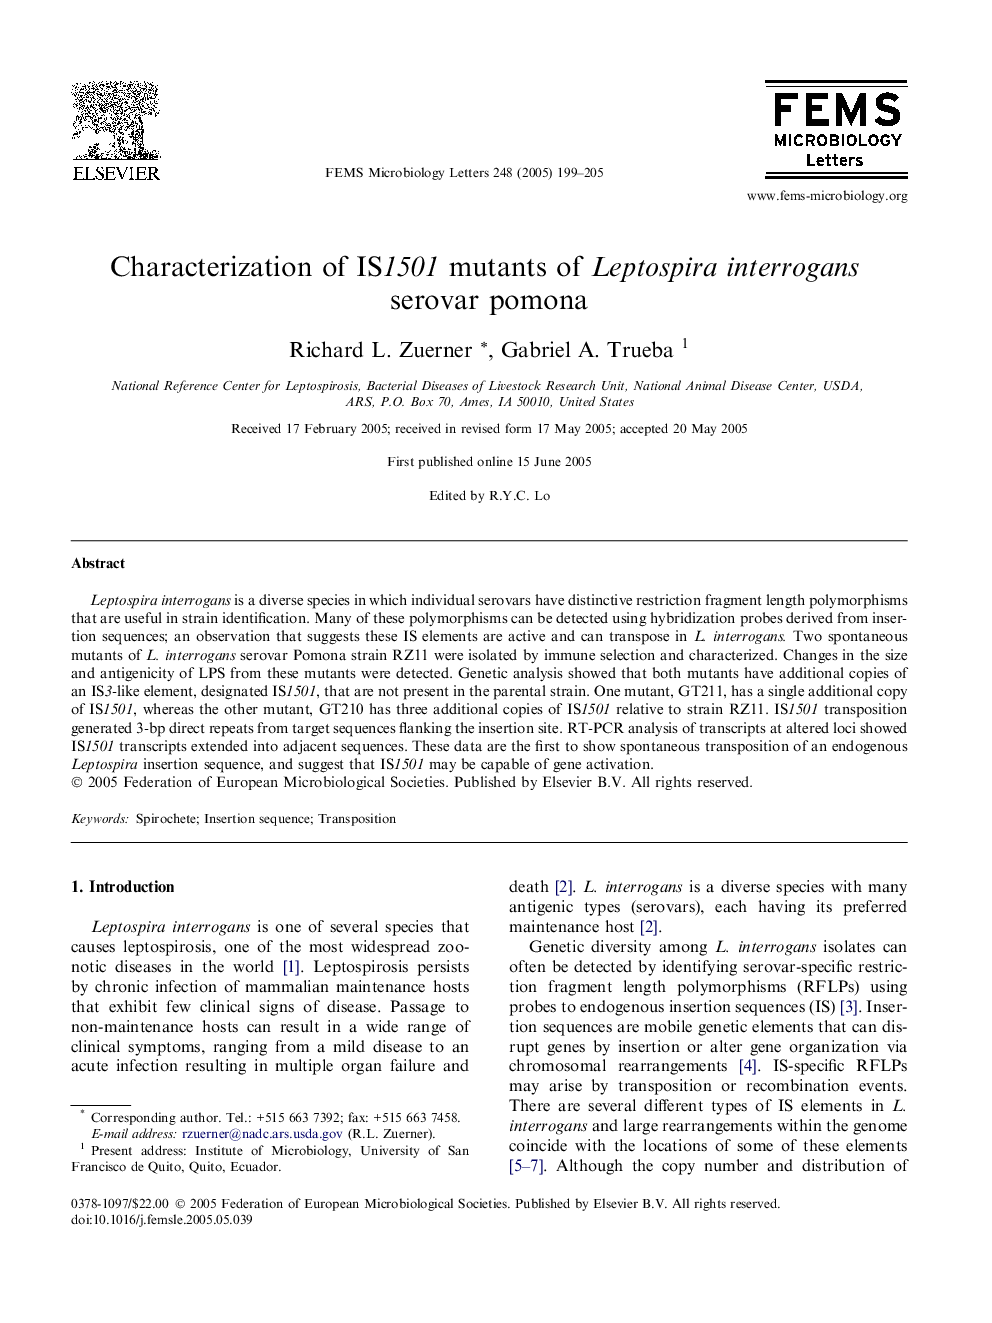 Characterization of IS1501 mutants of Leptospira interrogans serovar pomona